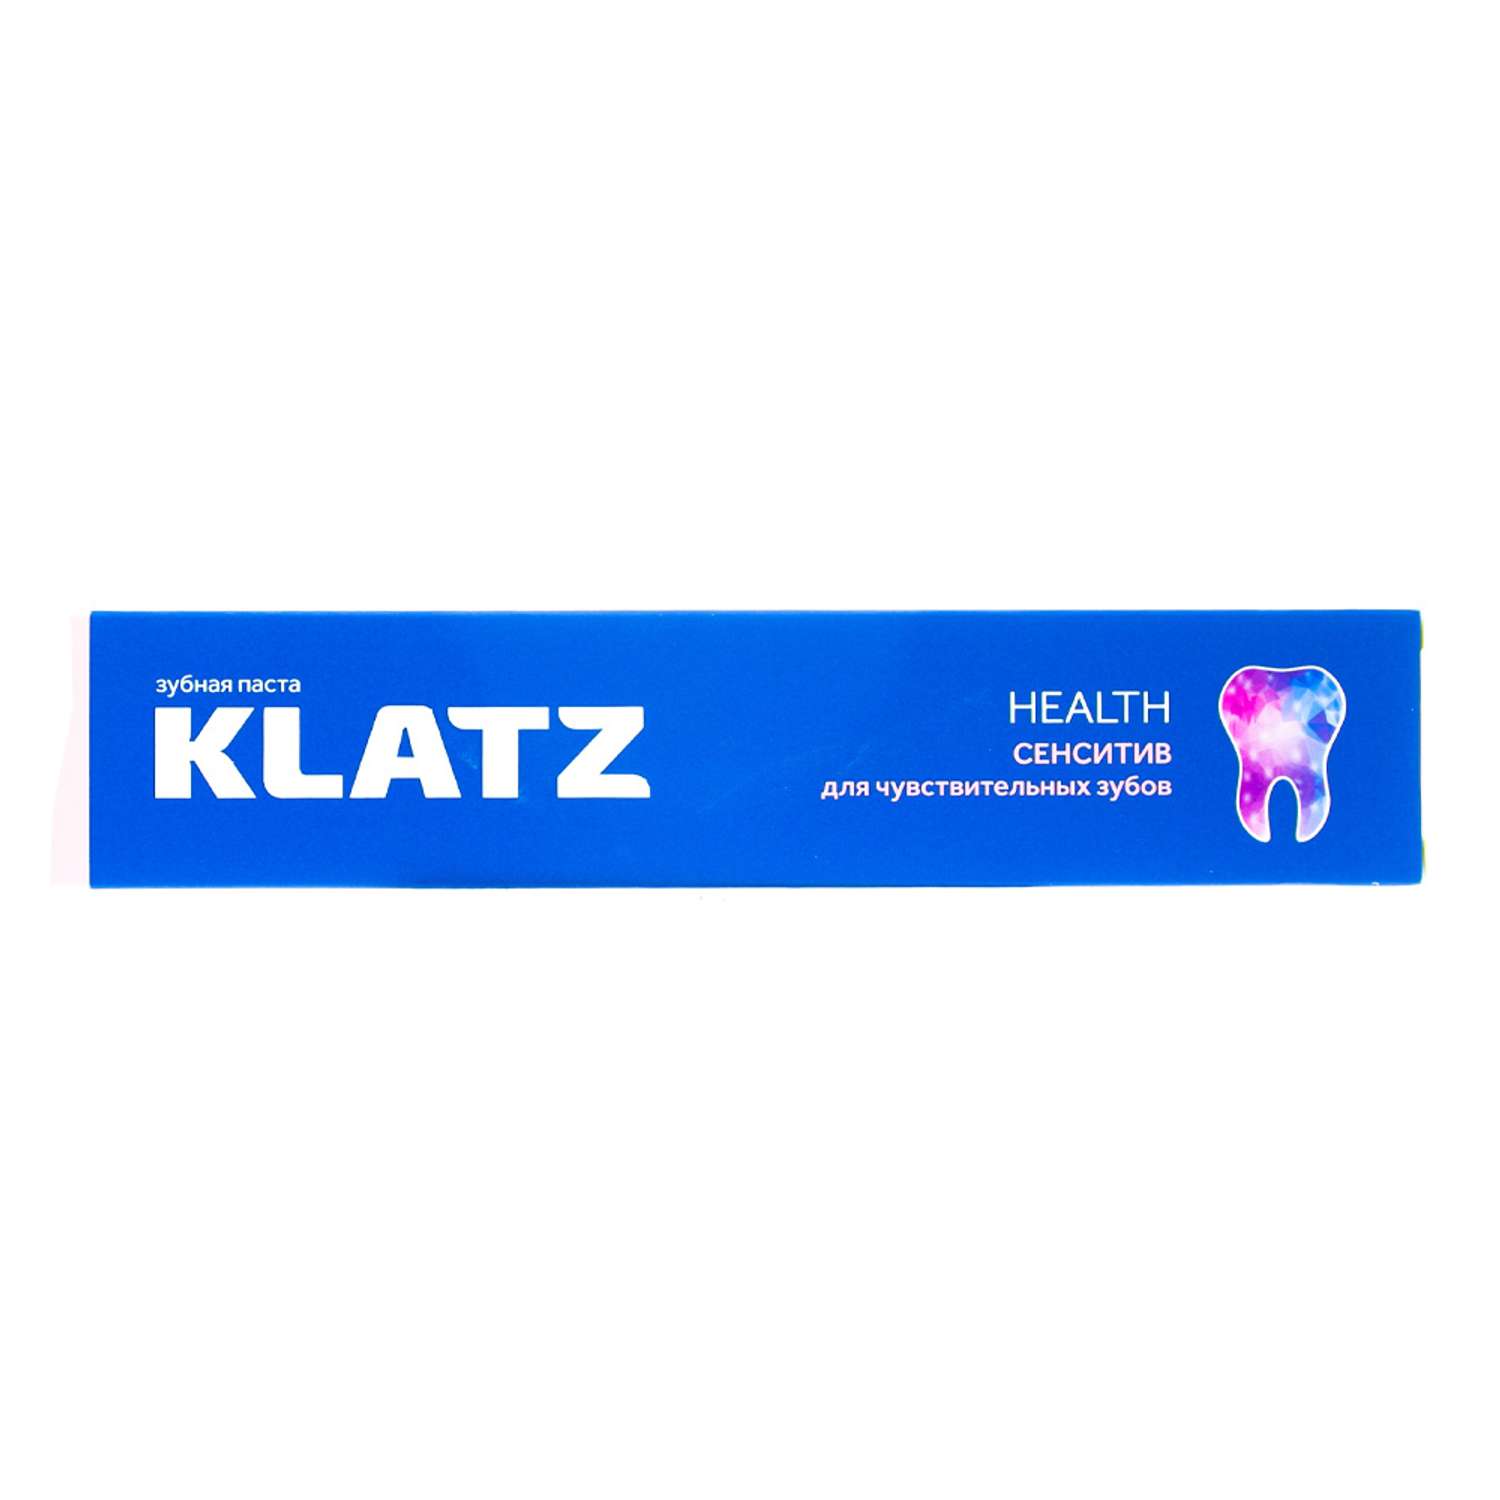 Зубная паста KLATZ HEALTH Сенситив 75 мл - фото 4